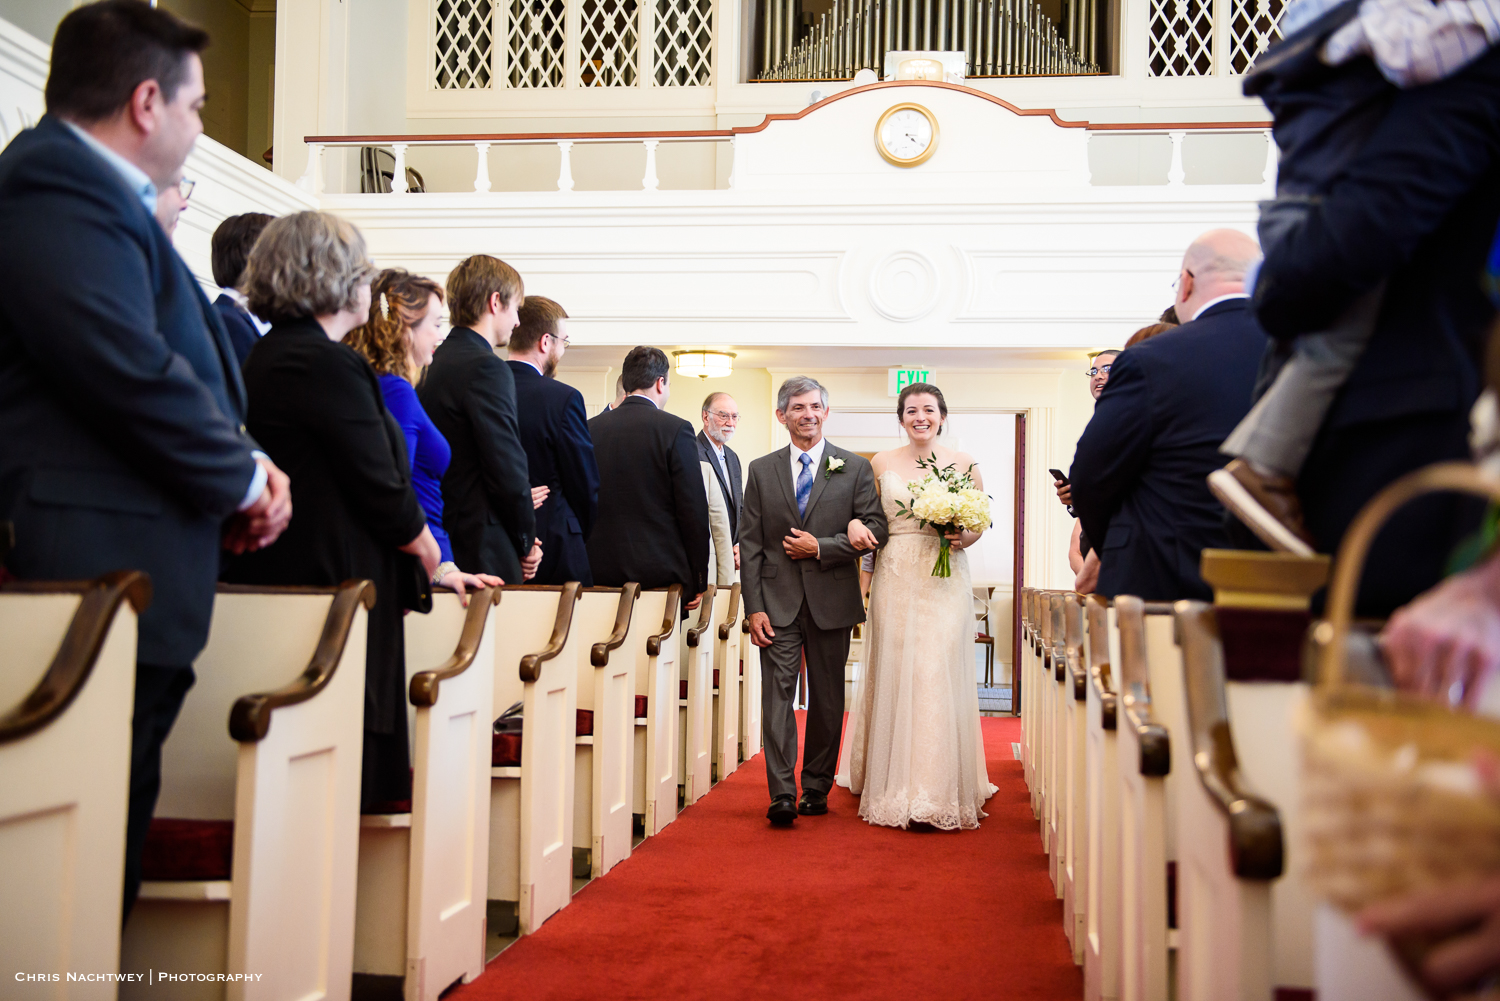 wedding-photos-united-states-coast-guard-academy-chris-nachtwey-photography-2019-12.jpg